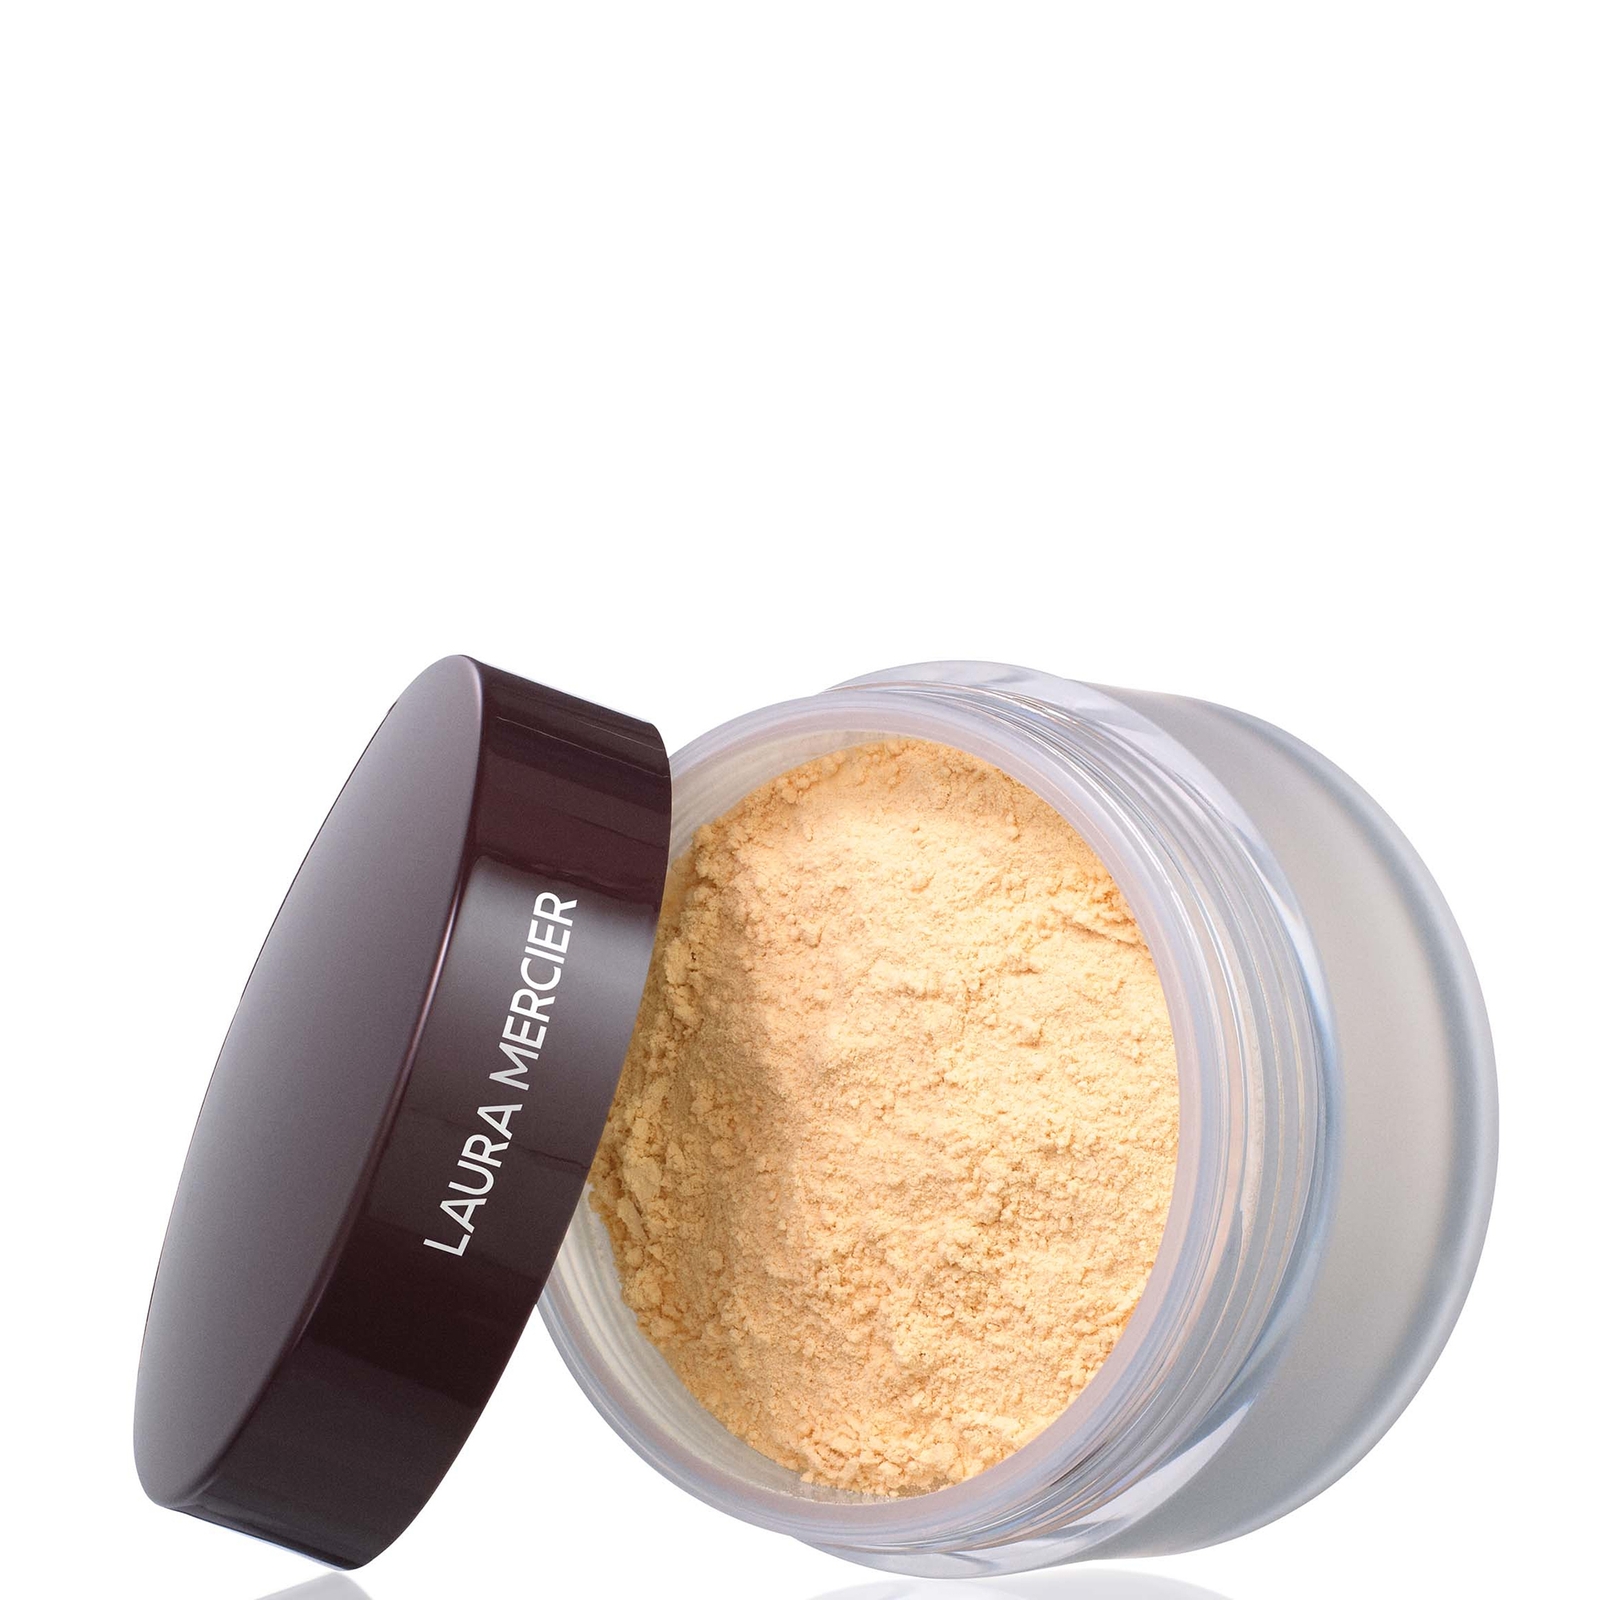 Image of Laura Mercier Translucent Loose Setting Powder 29g (Various Shades) - Honey